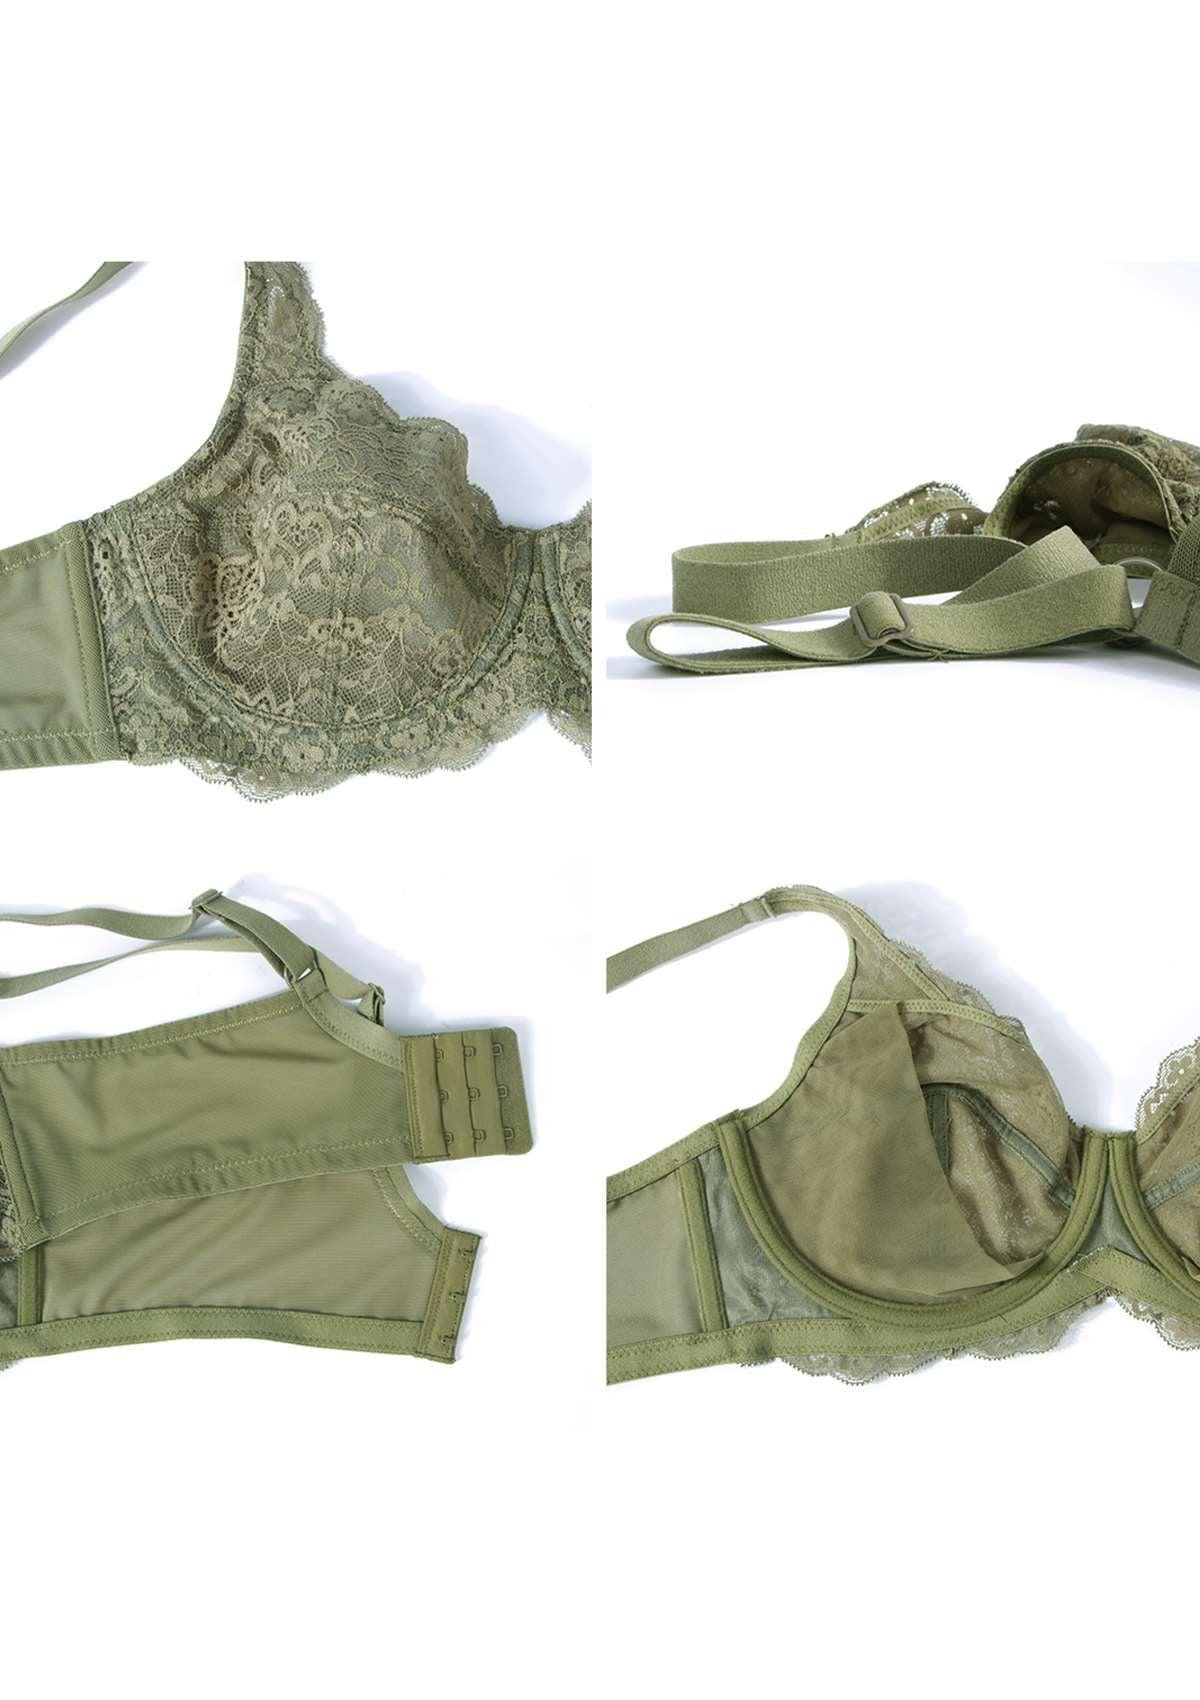 HSIA All-Over Floral Lace Unlined Bra: Minimizer Bra For Heavy Breasts - Dark Green / 38 / DD/E